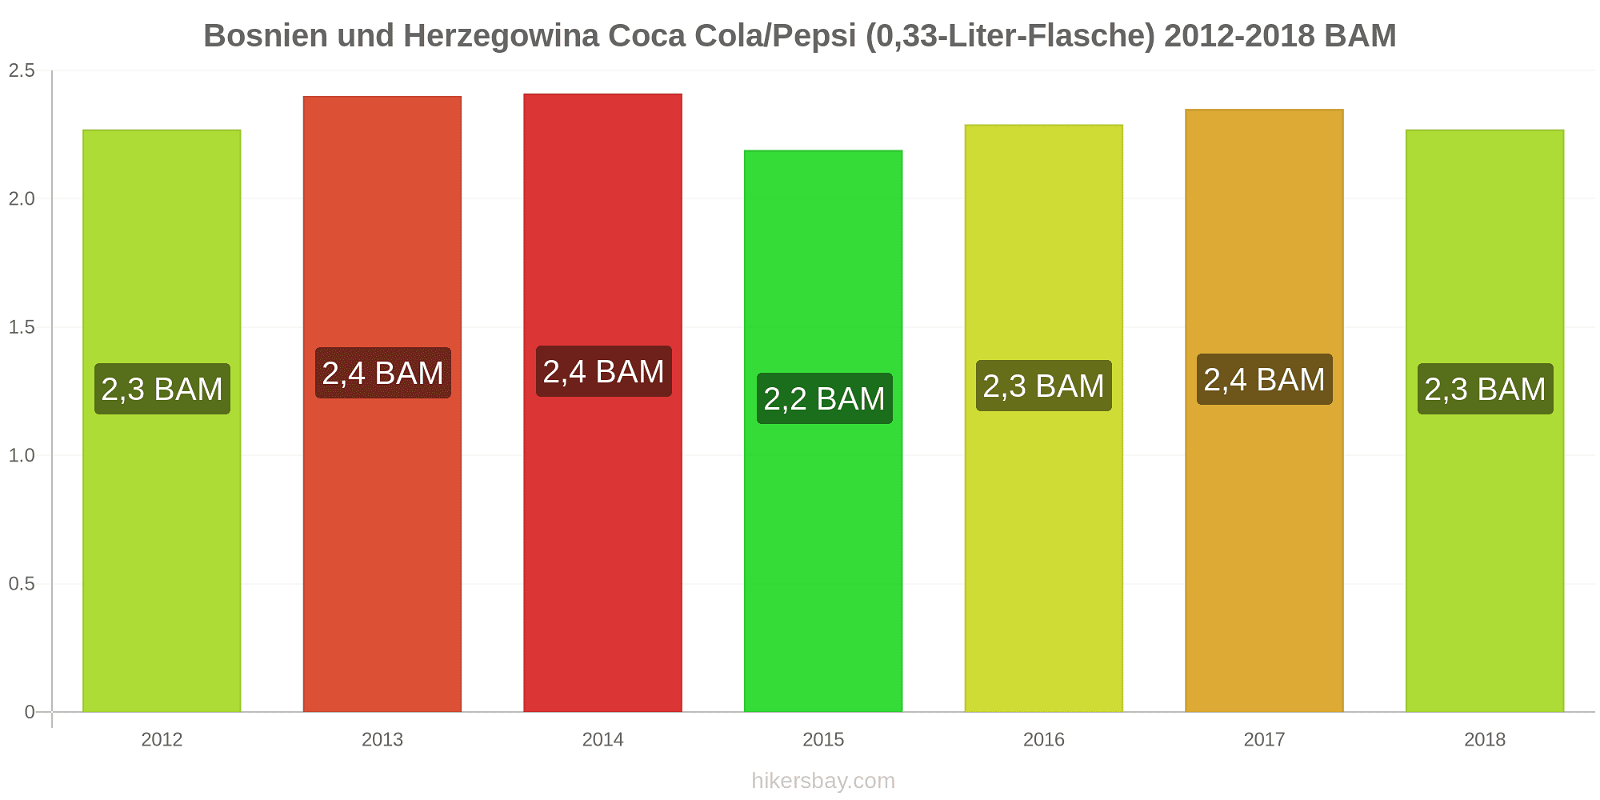 Bosnien und Herzegowina Preisänderungen Coke/Pepsi (0,33-Liter-Flasche) hikersbay.com